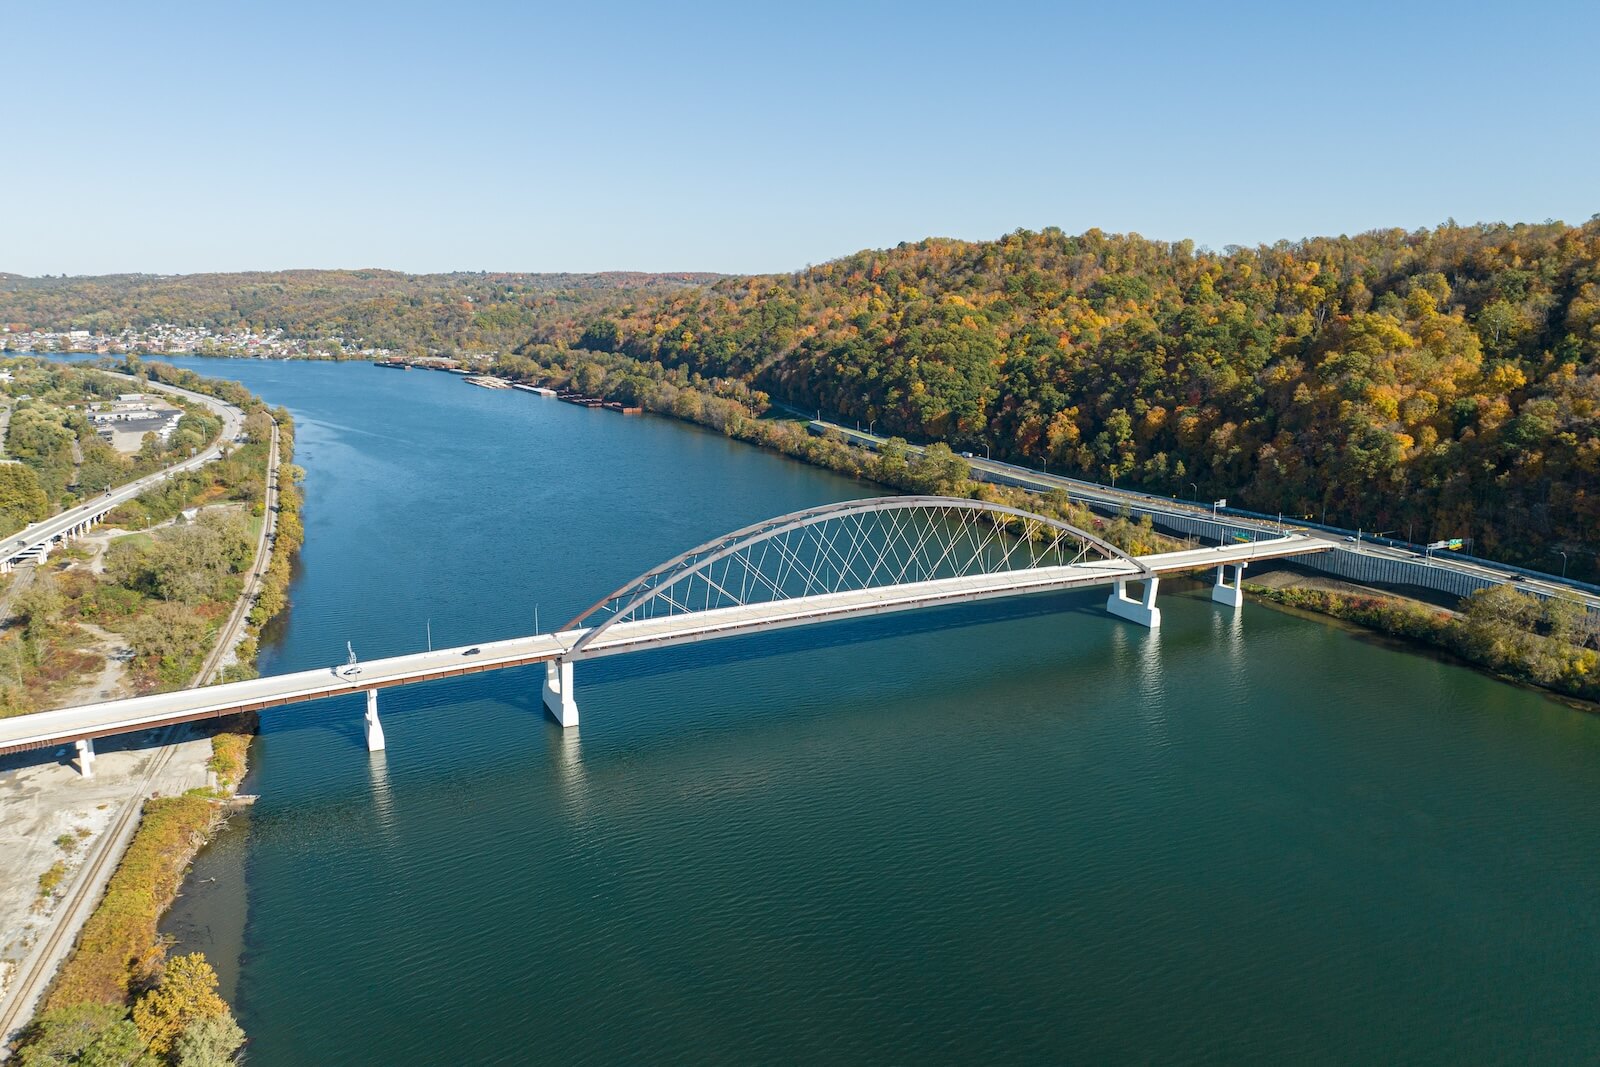 Flatiron's Wellsburg Bridge project